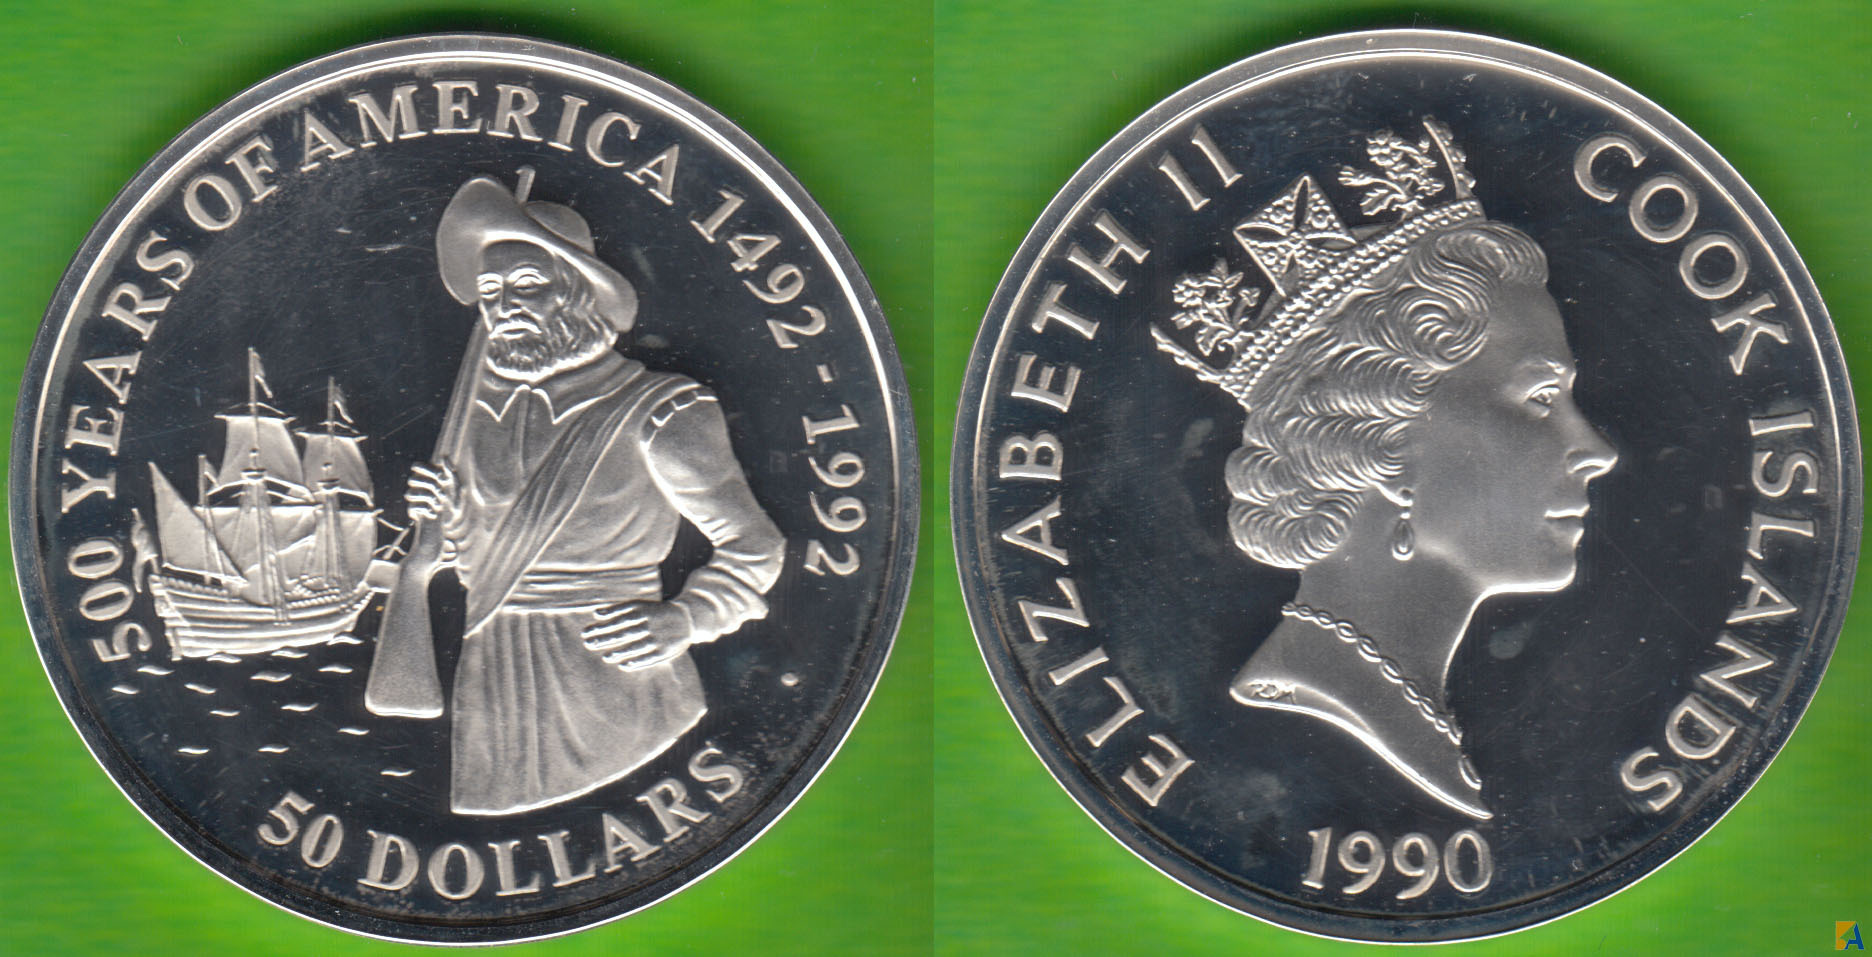 ISLAS COOK - COOK ISLANDS. 50 DOLARES (DOLLARS) DE 1990. PROOF. PLATA 0.925.